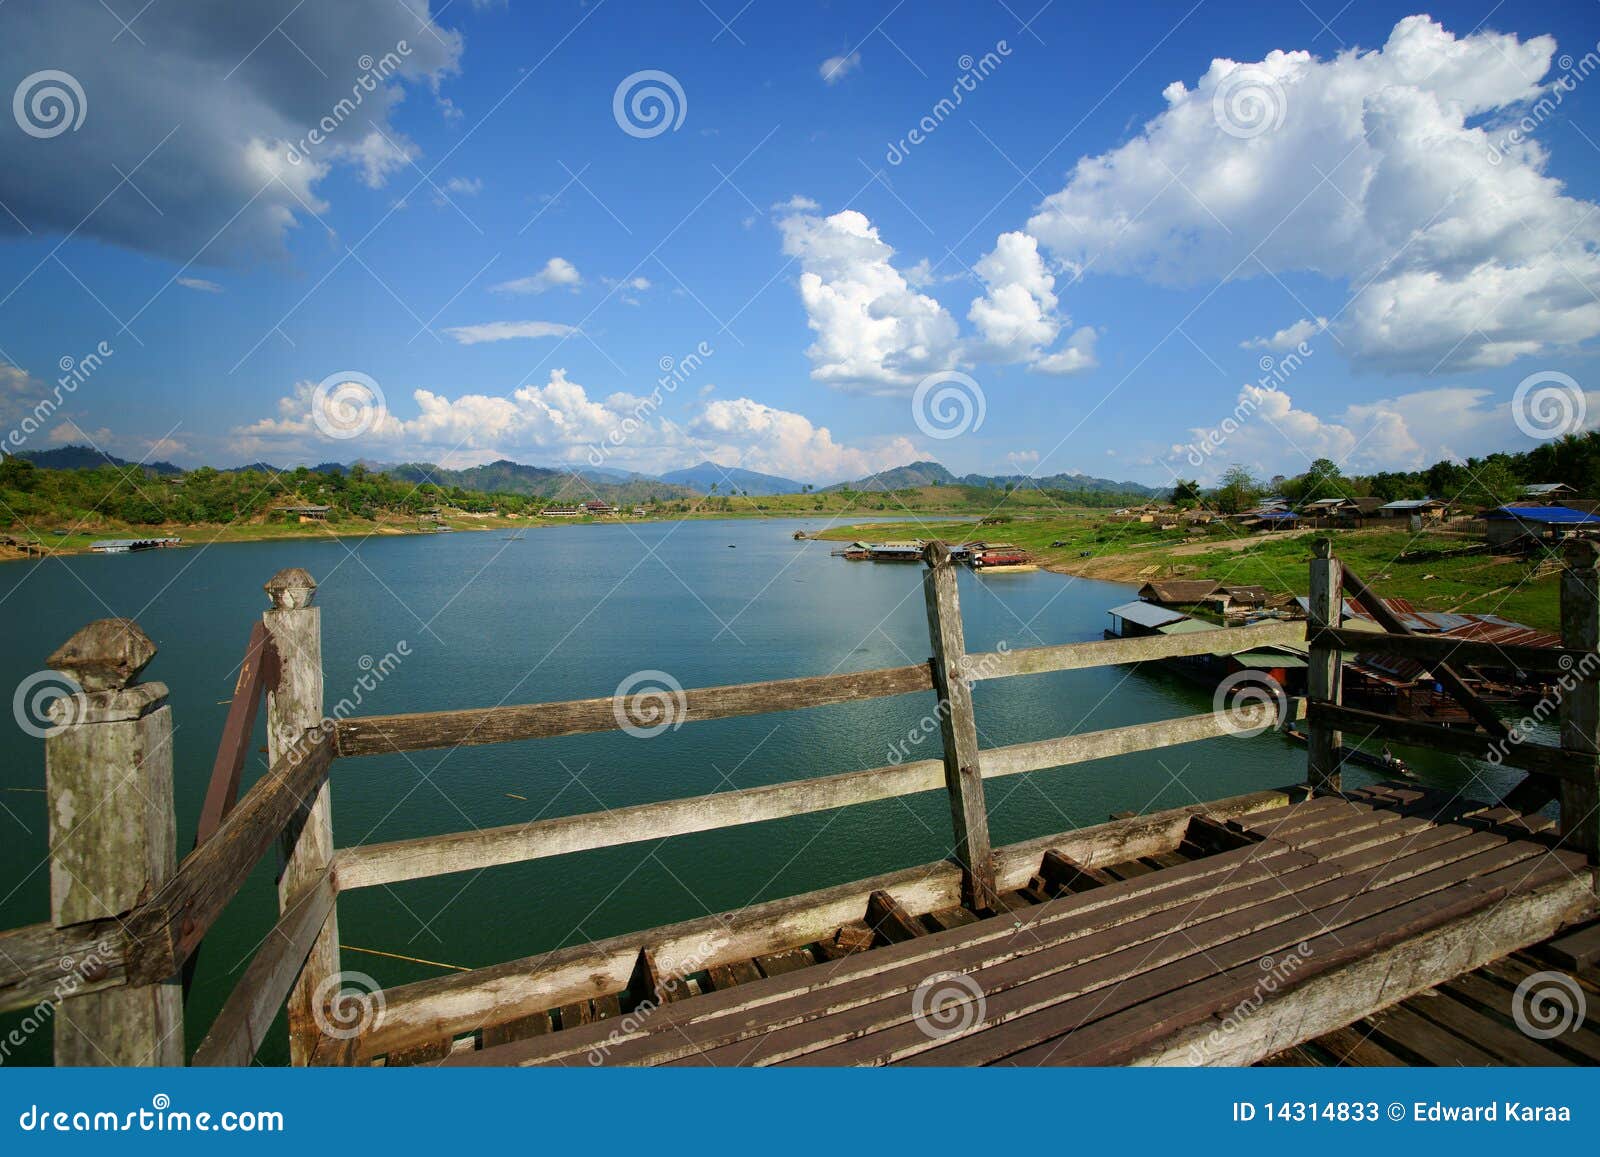 sangkhlaburi artificial lake from saphan mon